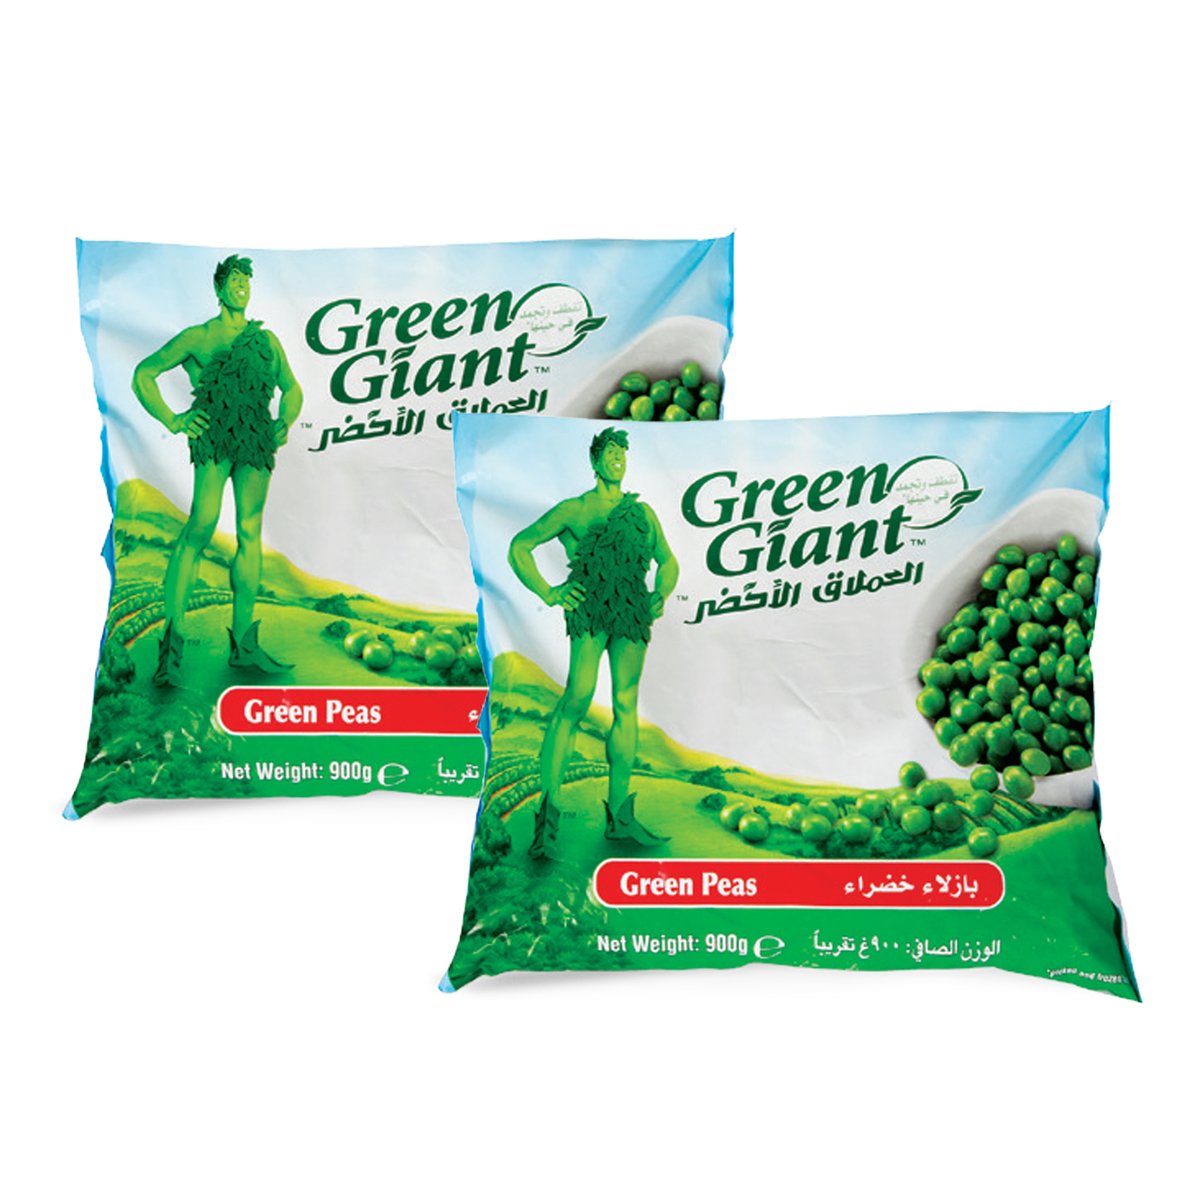 Green Giant Green Peas 2 x 900 g